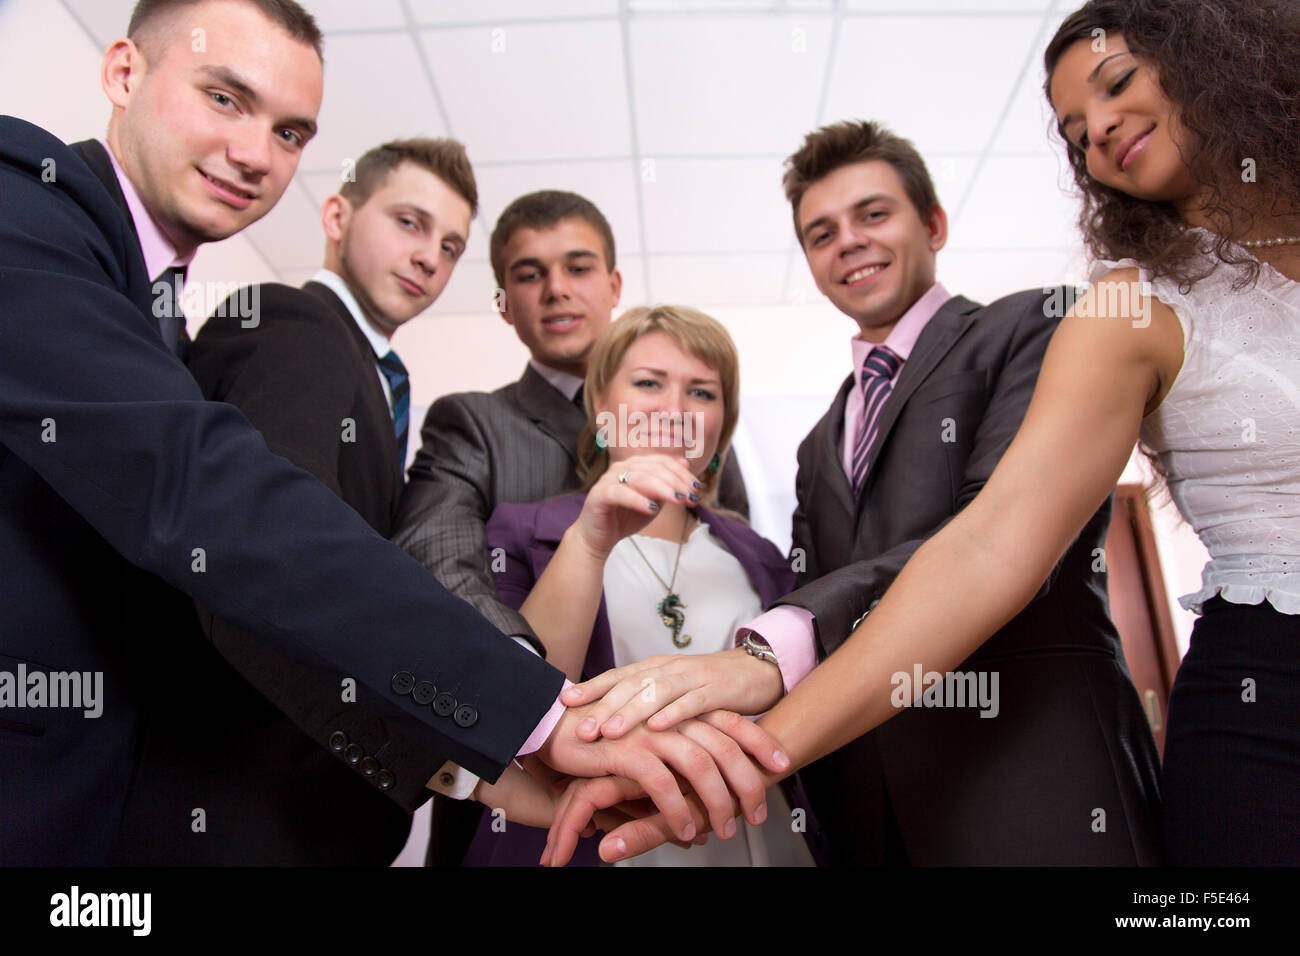 Friendly harmonious business team Stock Photo